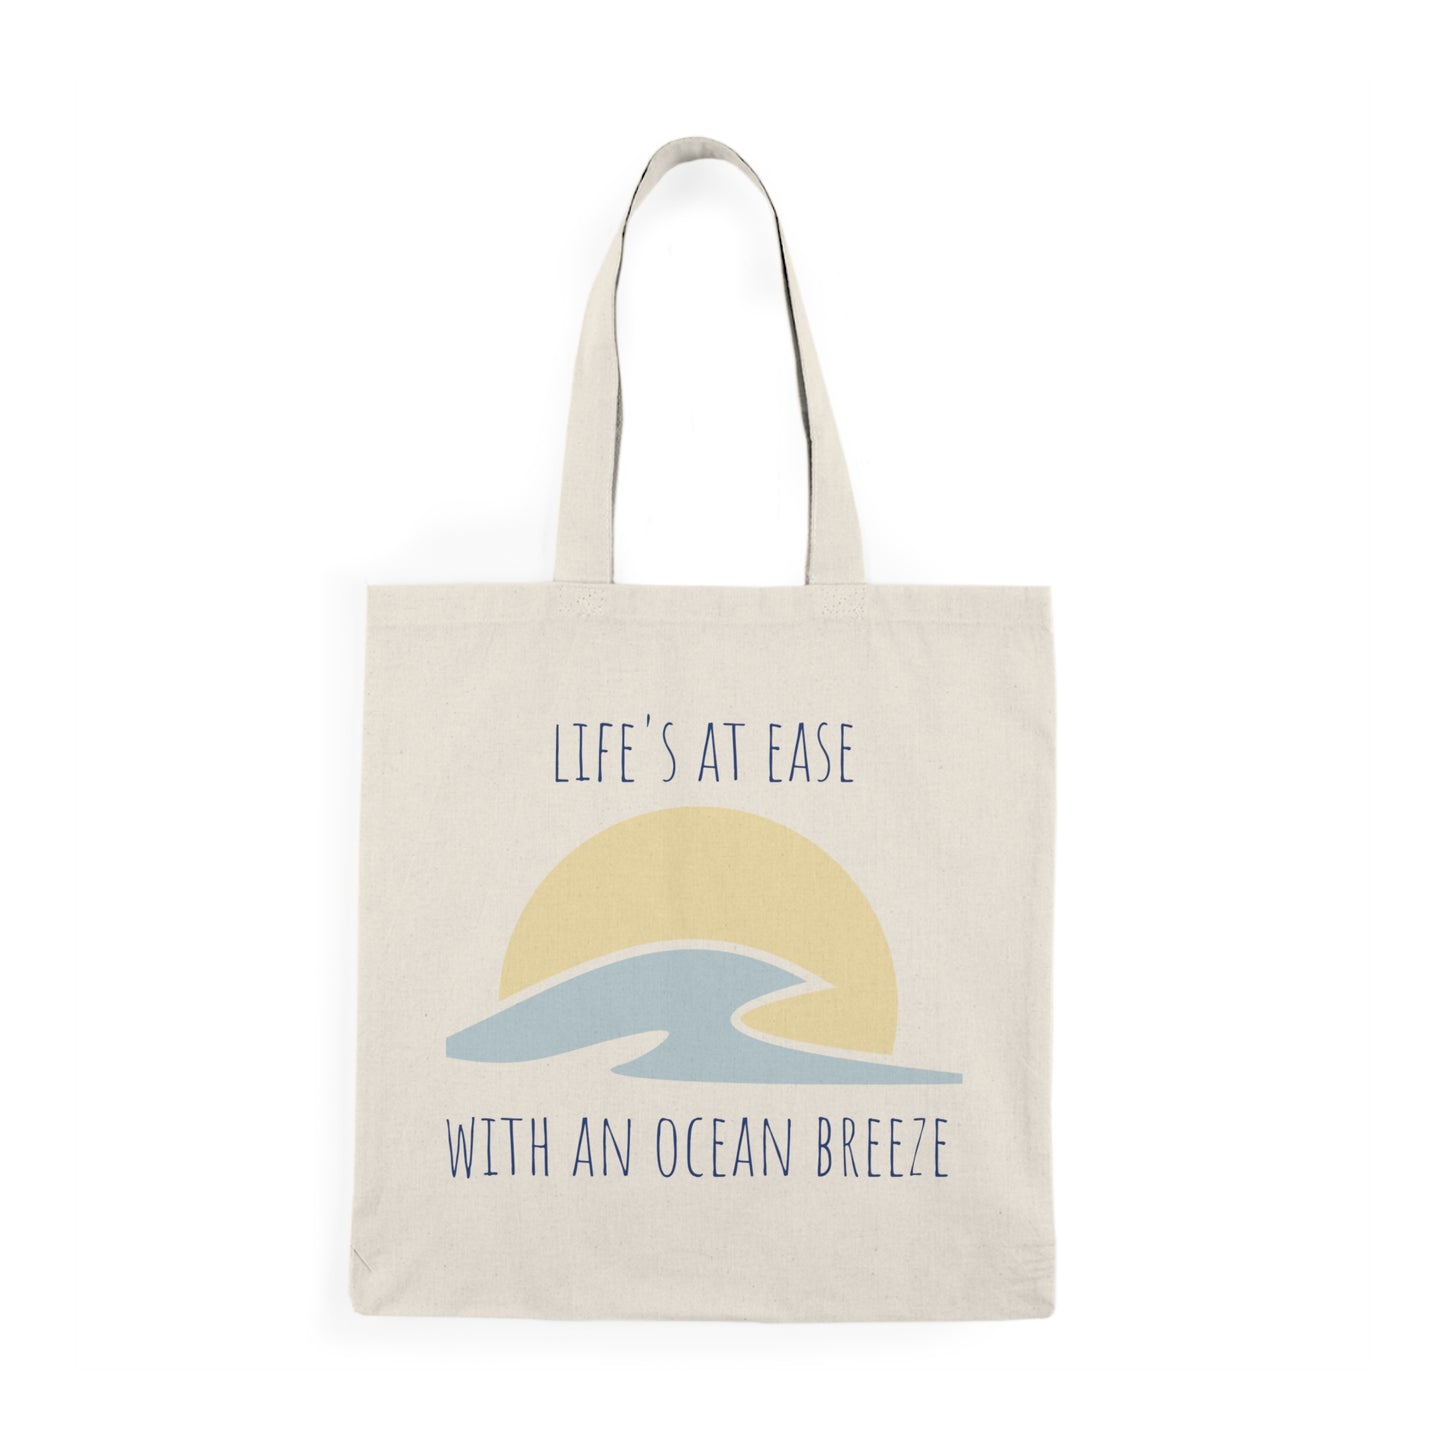 life's at ease with an ocean breeze - florida keys tote bag - beach tote - florida beach bag